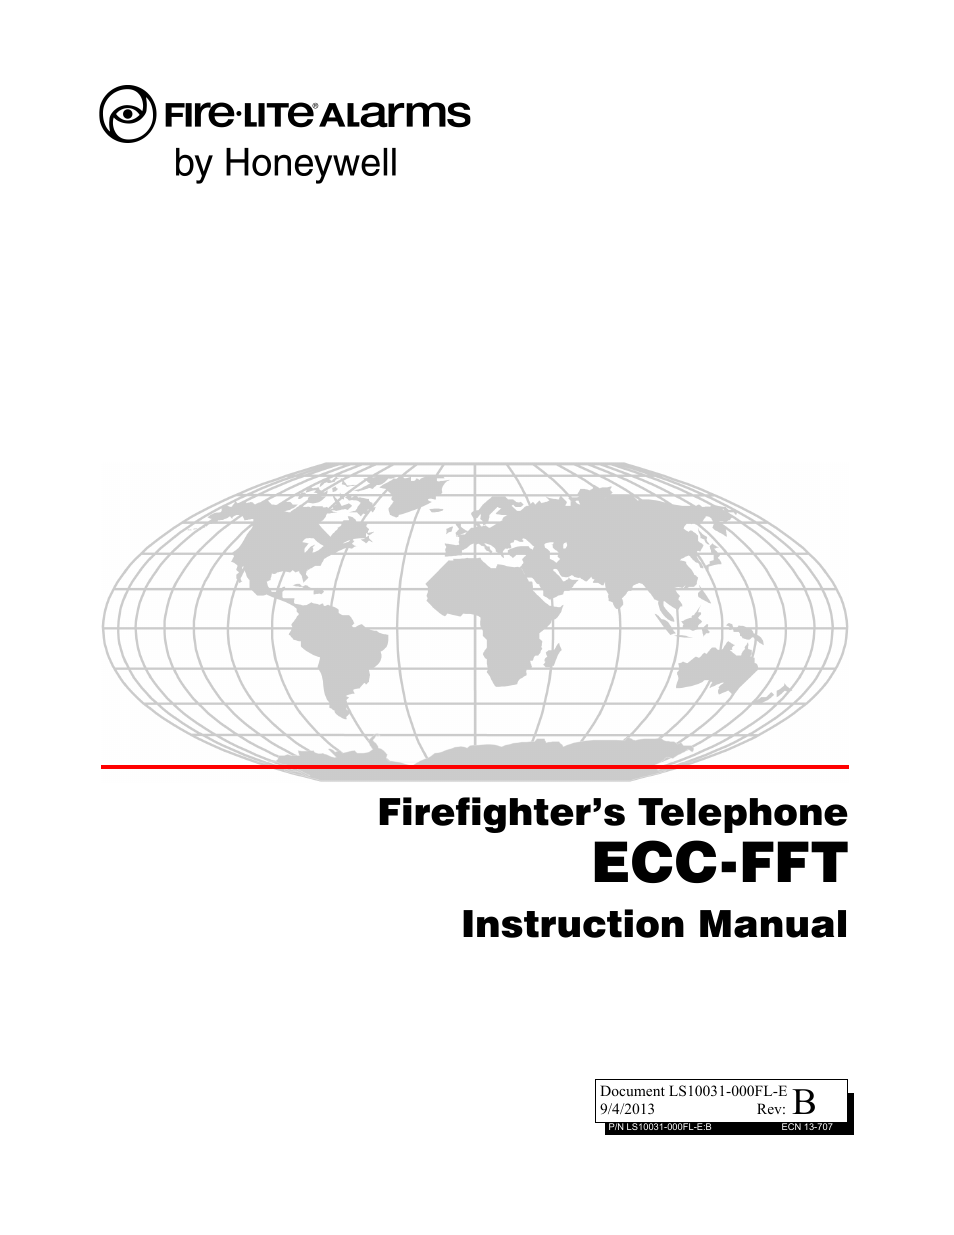 ECC-FFT Firefighters Telephone